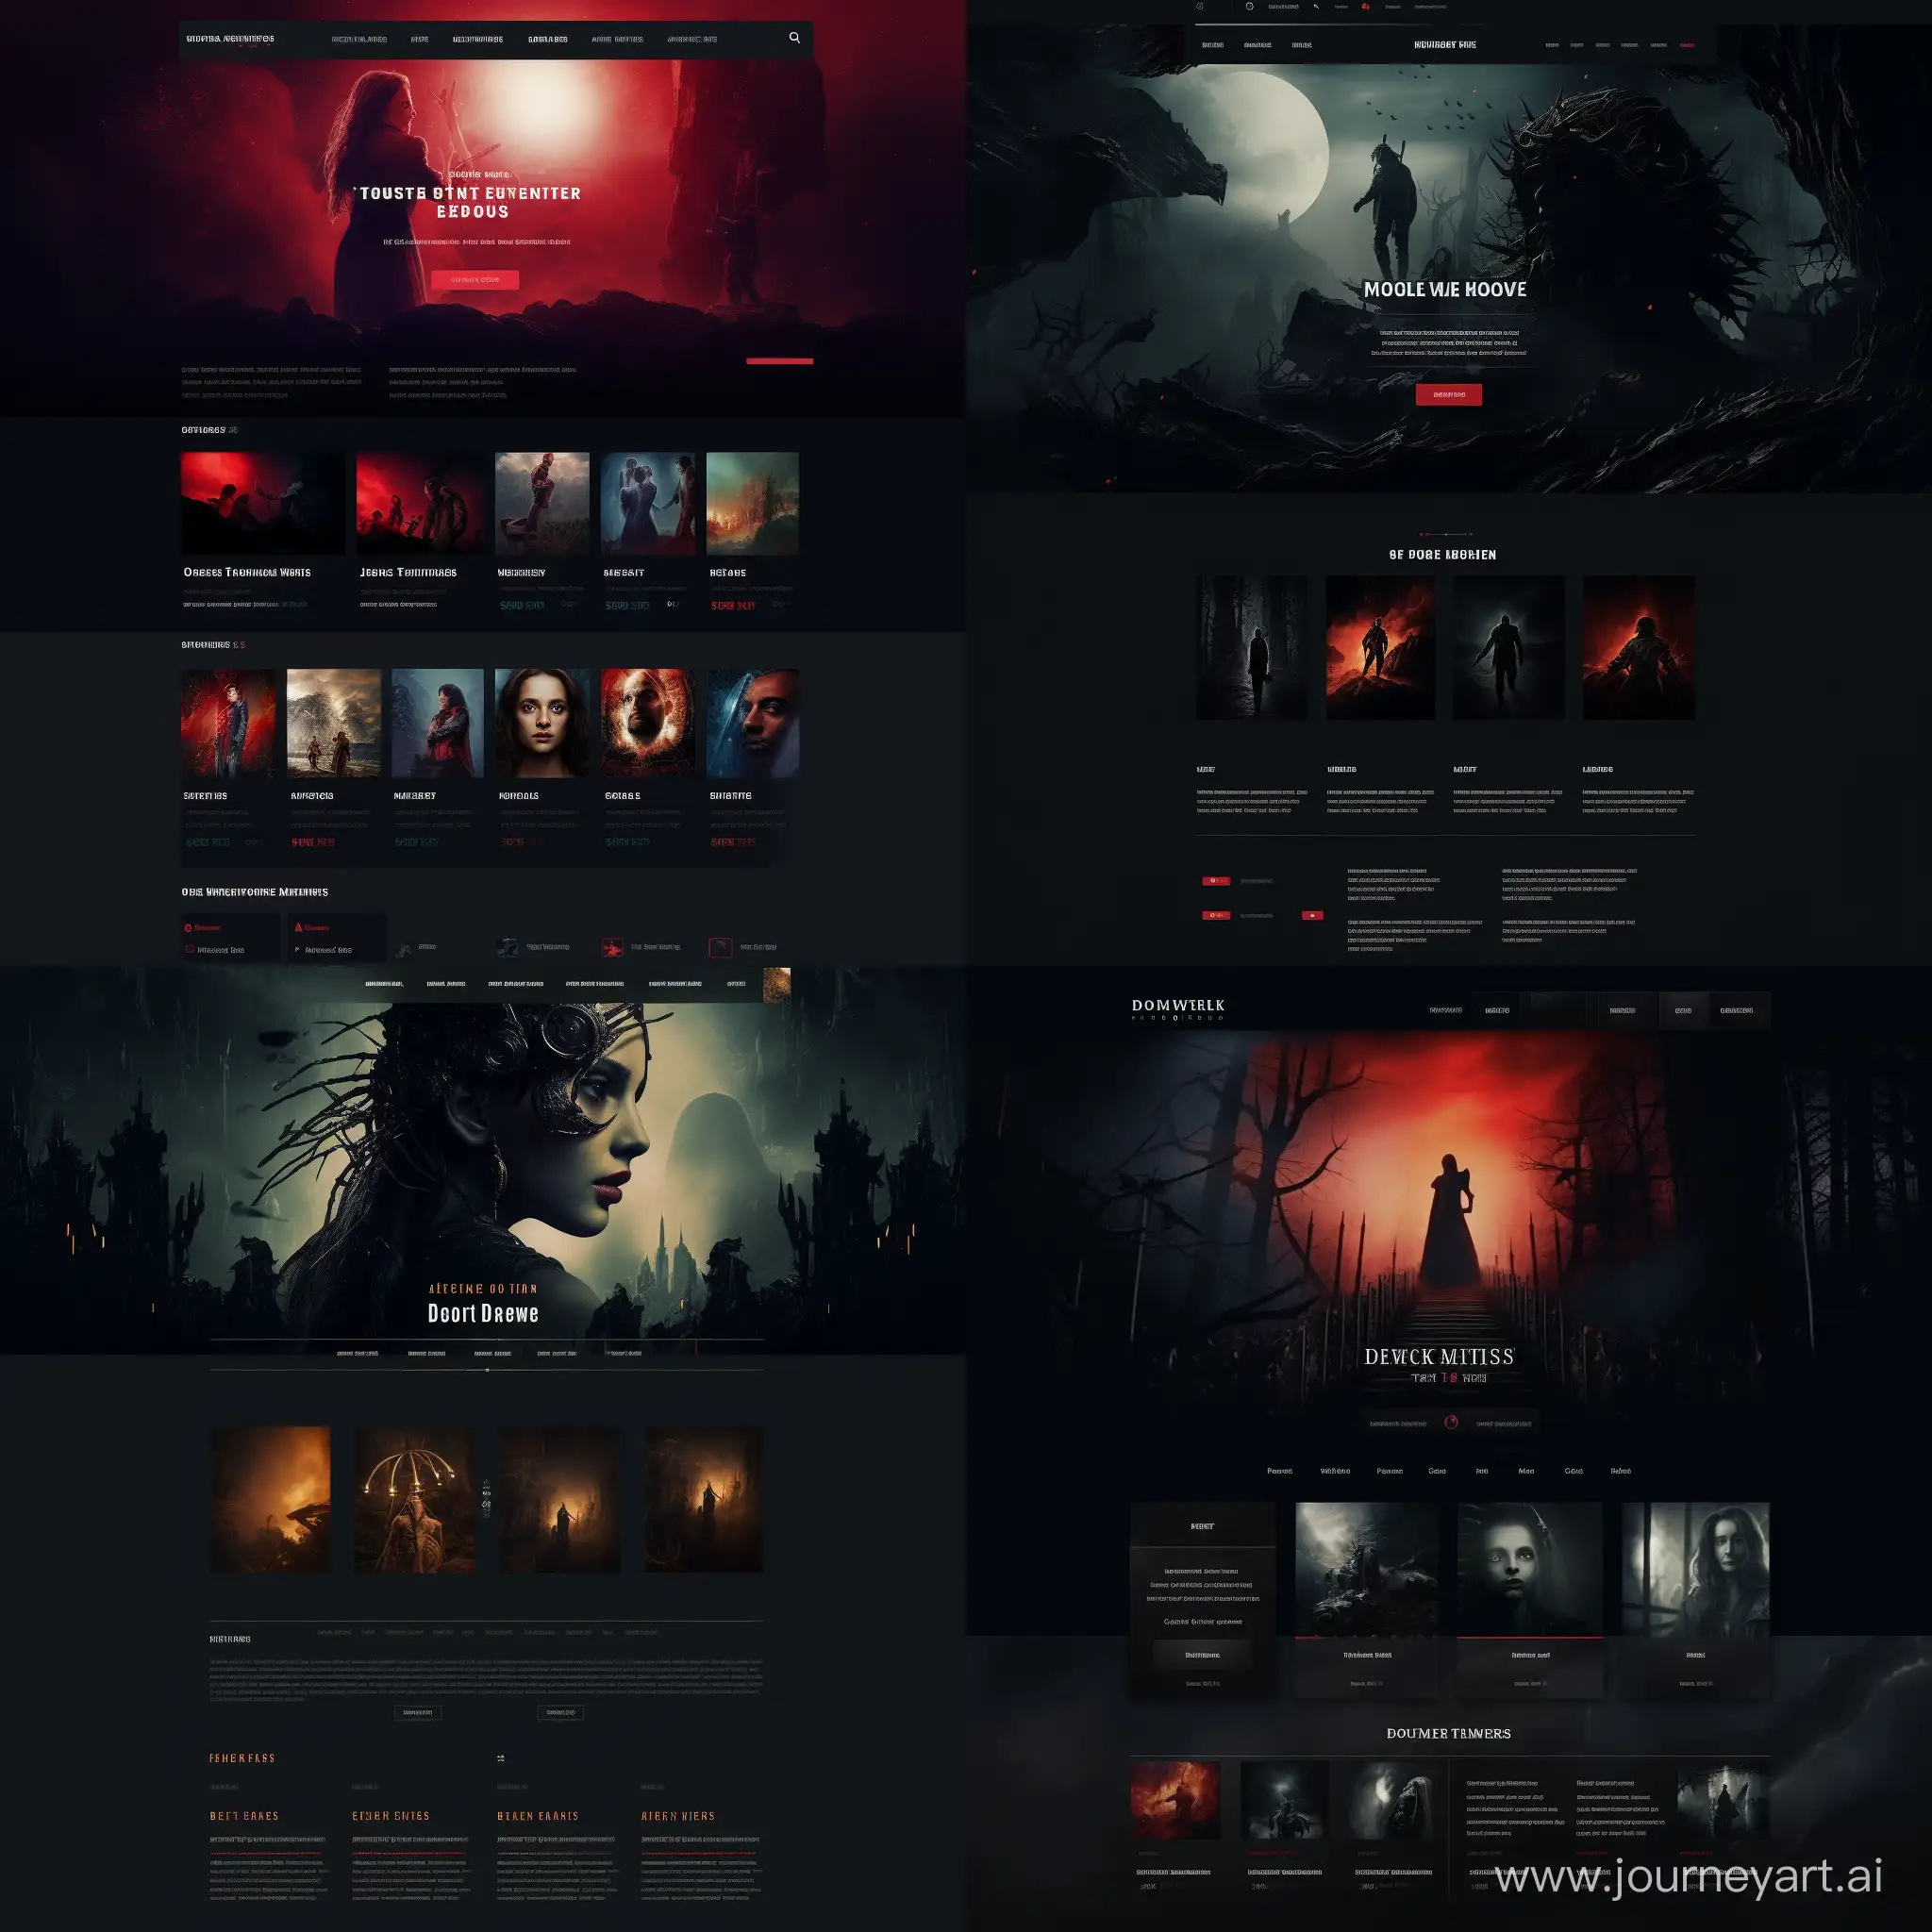 Dark and aesthetic themed movie streaming website mockup